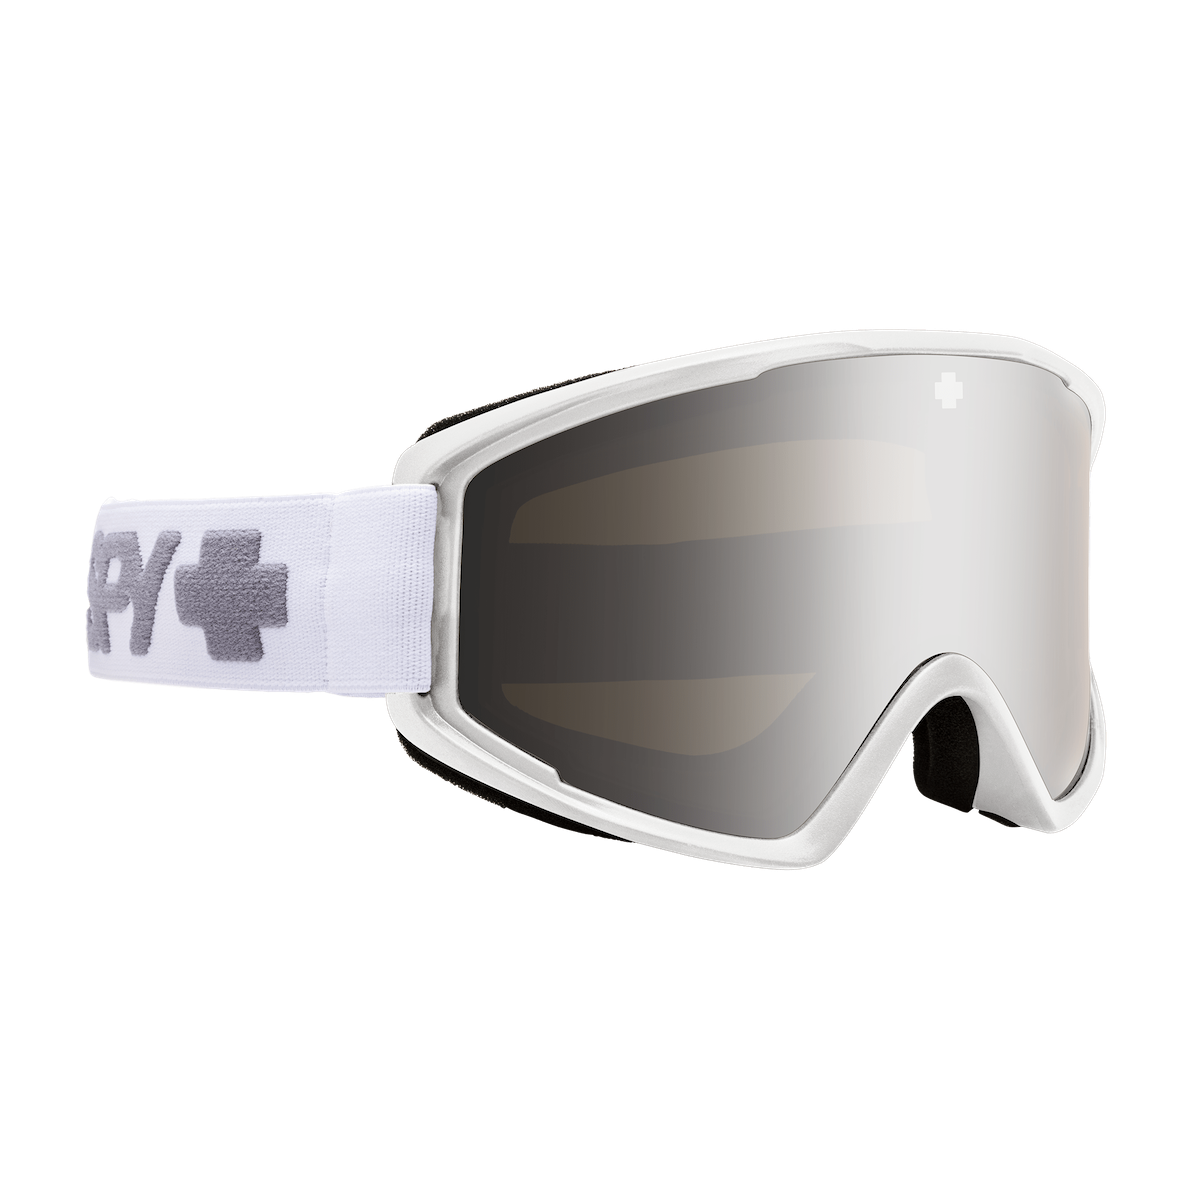 SPY CRUSHER ELITE SNOW goggles - matte white